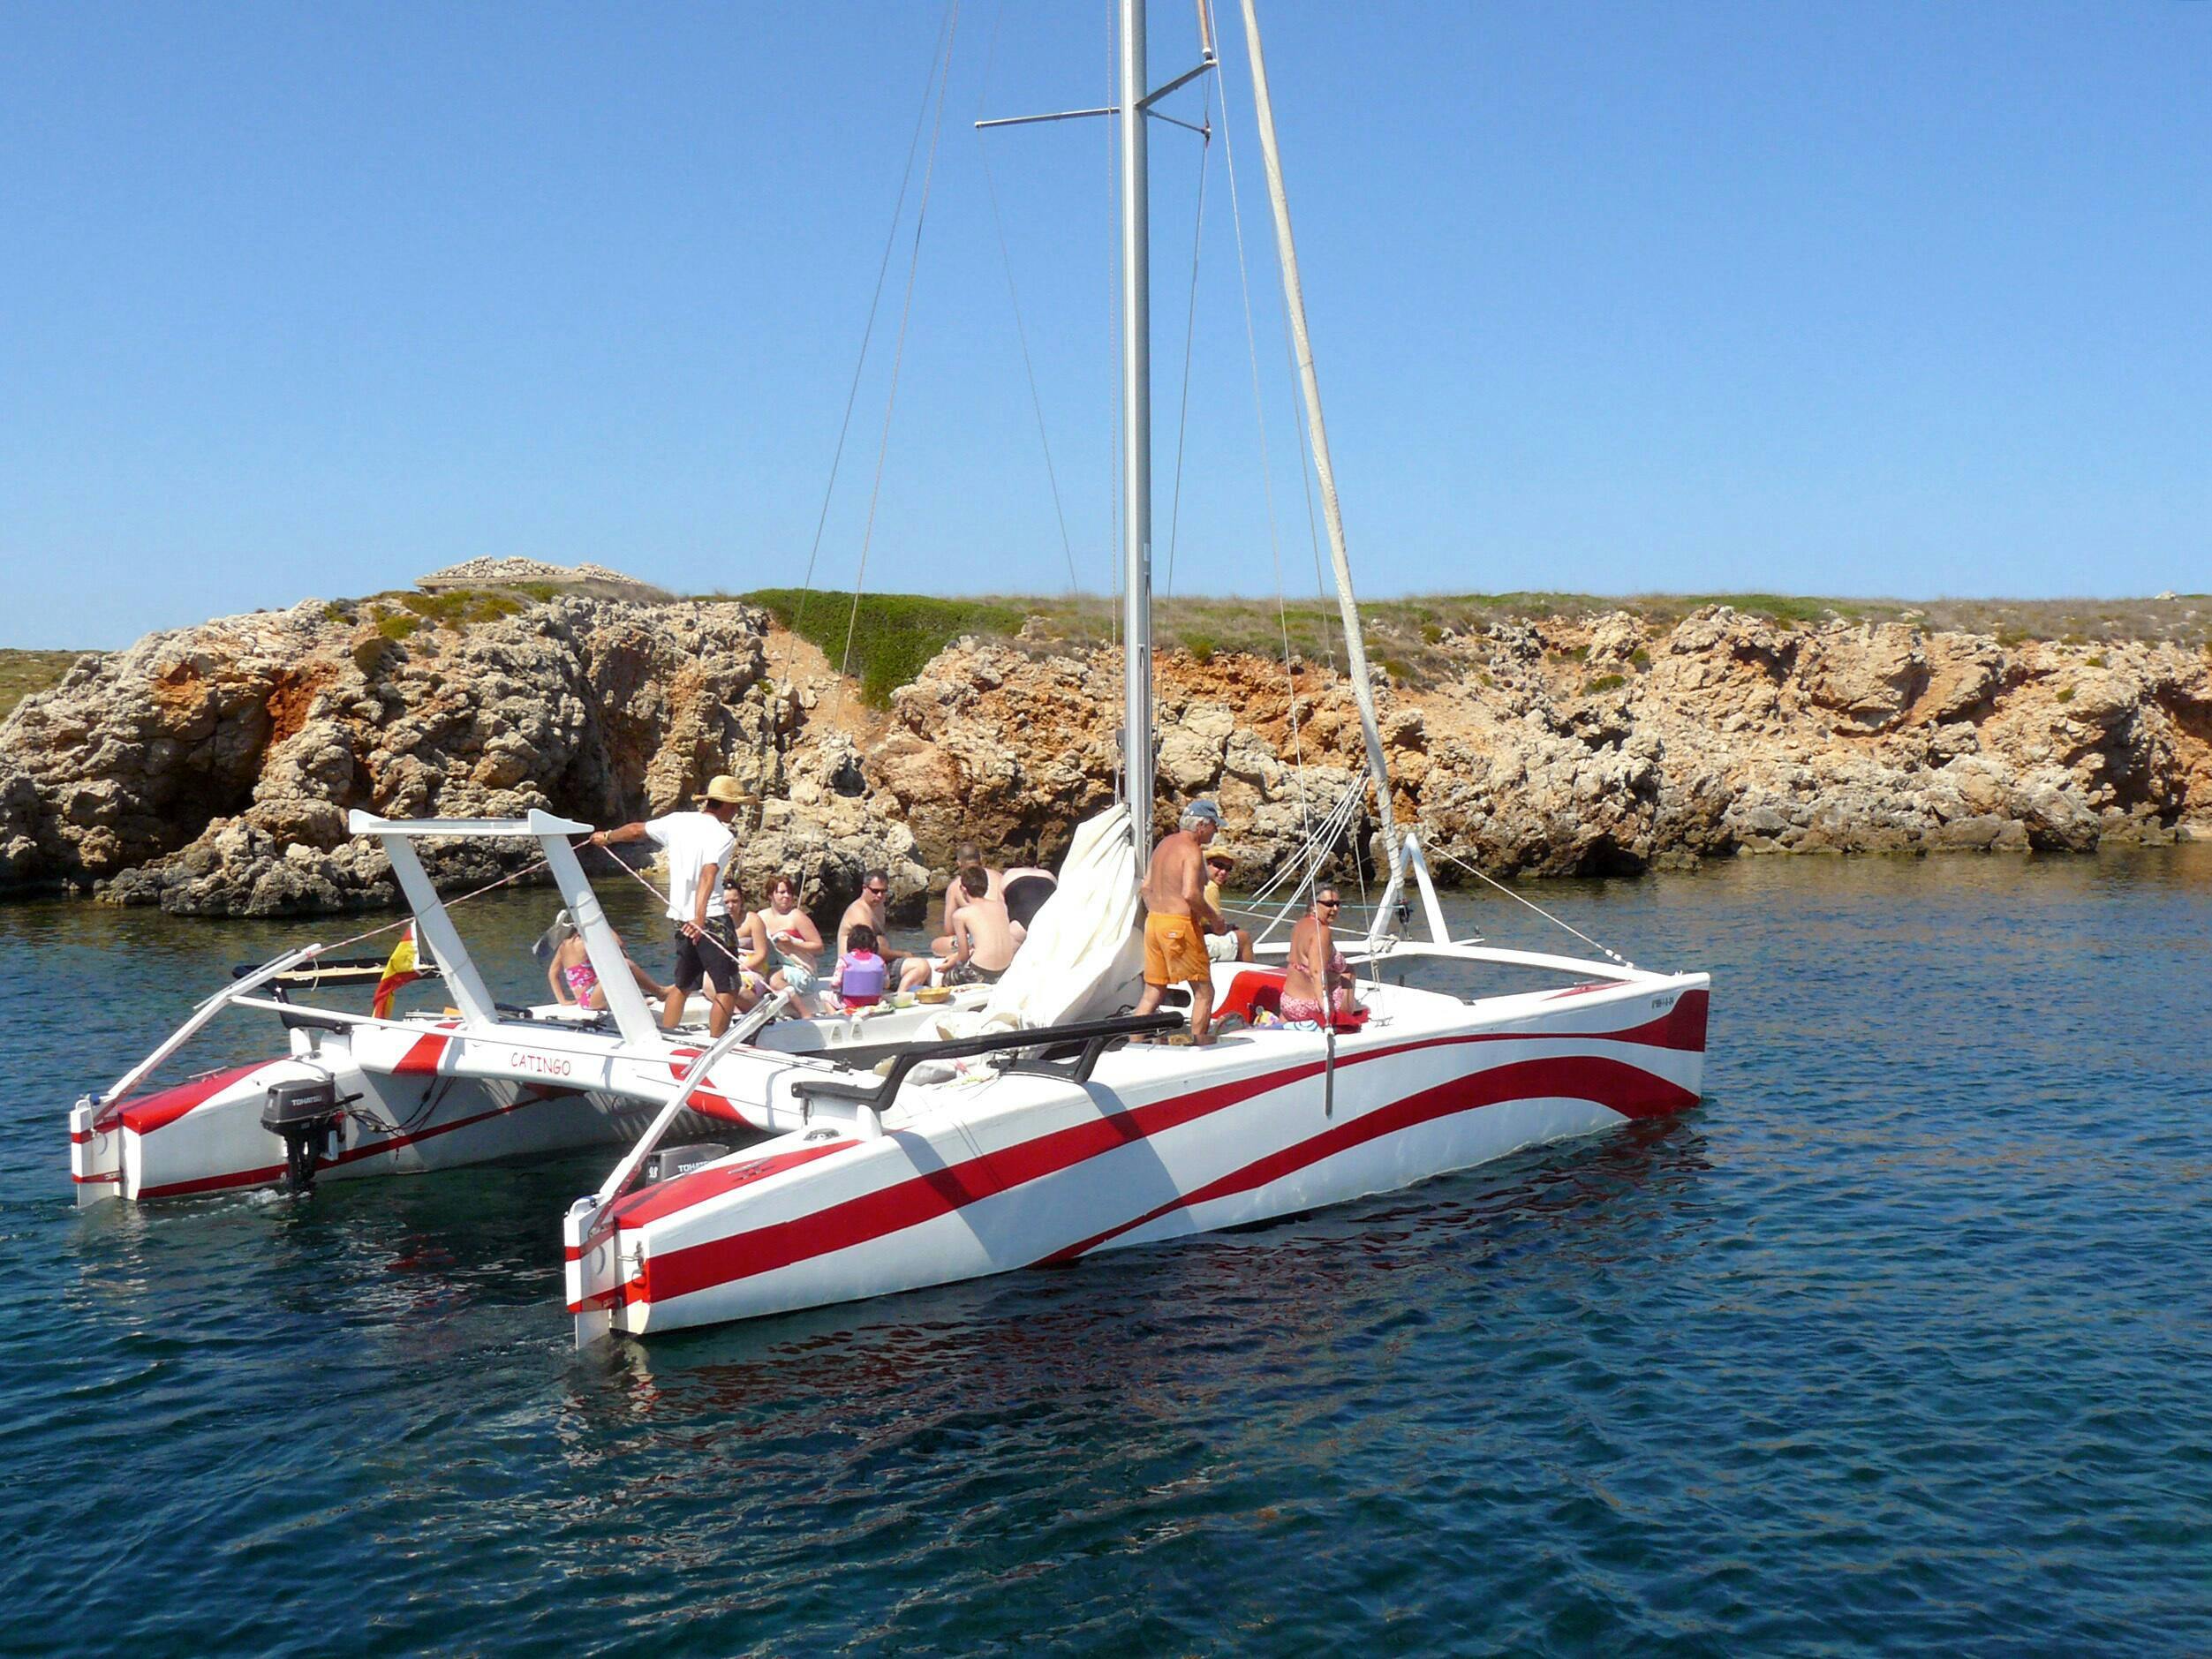 Location de catamarans à Minorque